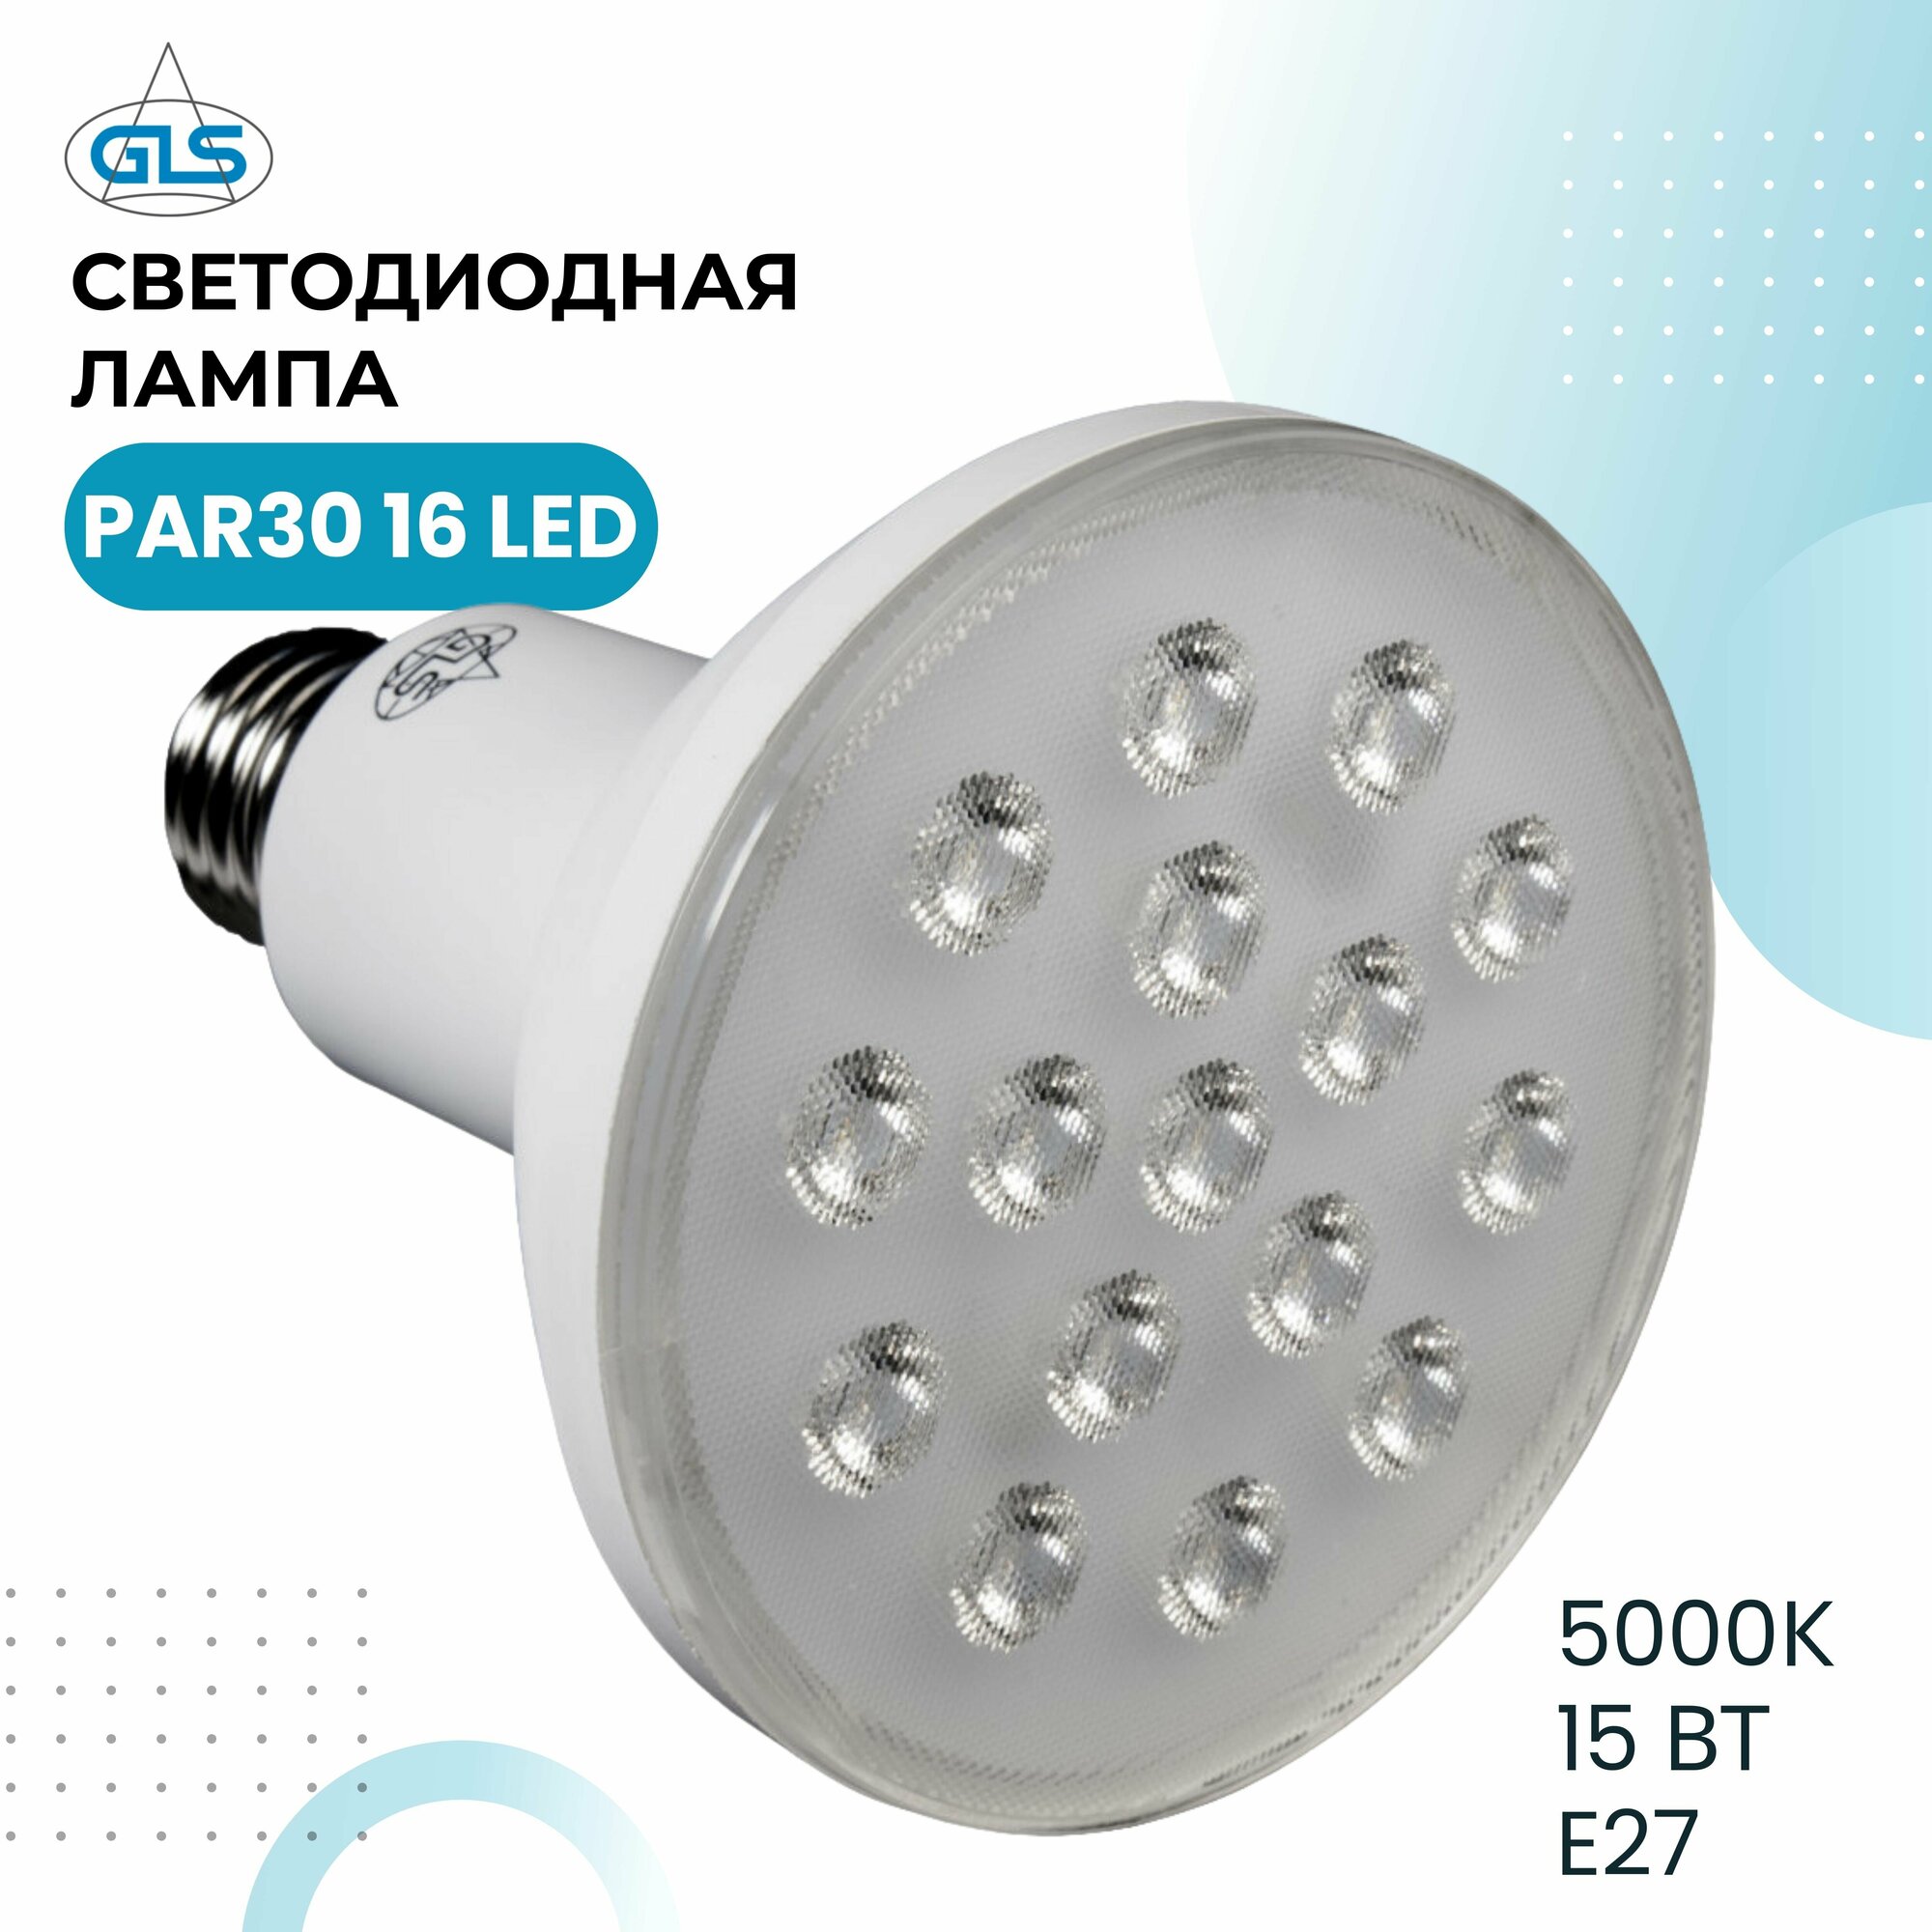 Светодиодная лампа PAR30 16 LED, 5000К, 15 Вт, цоколь E28